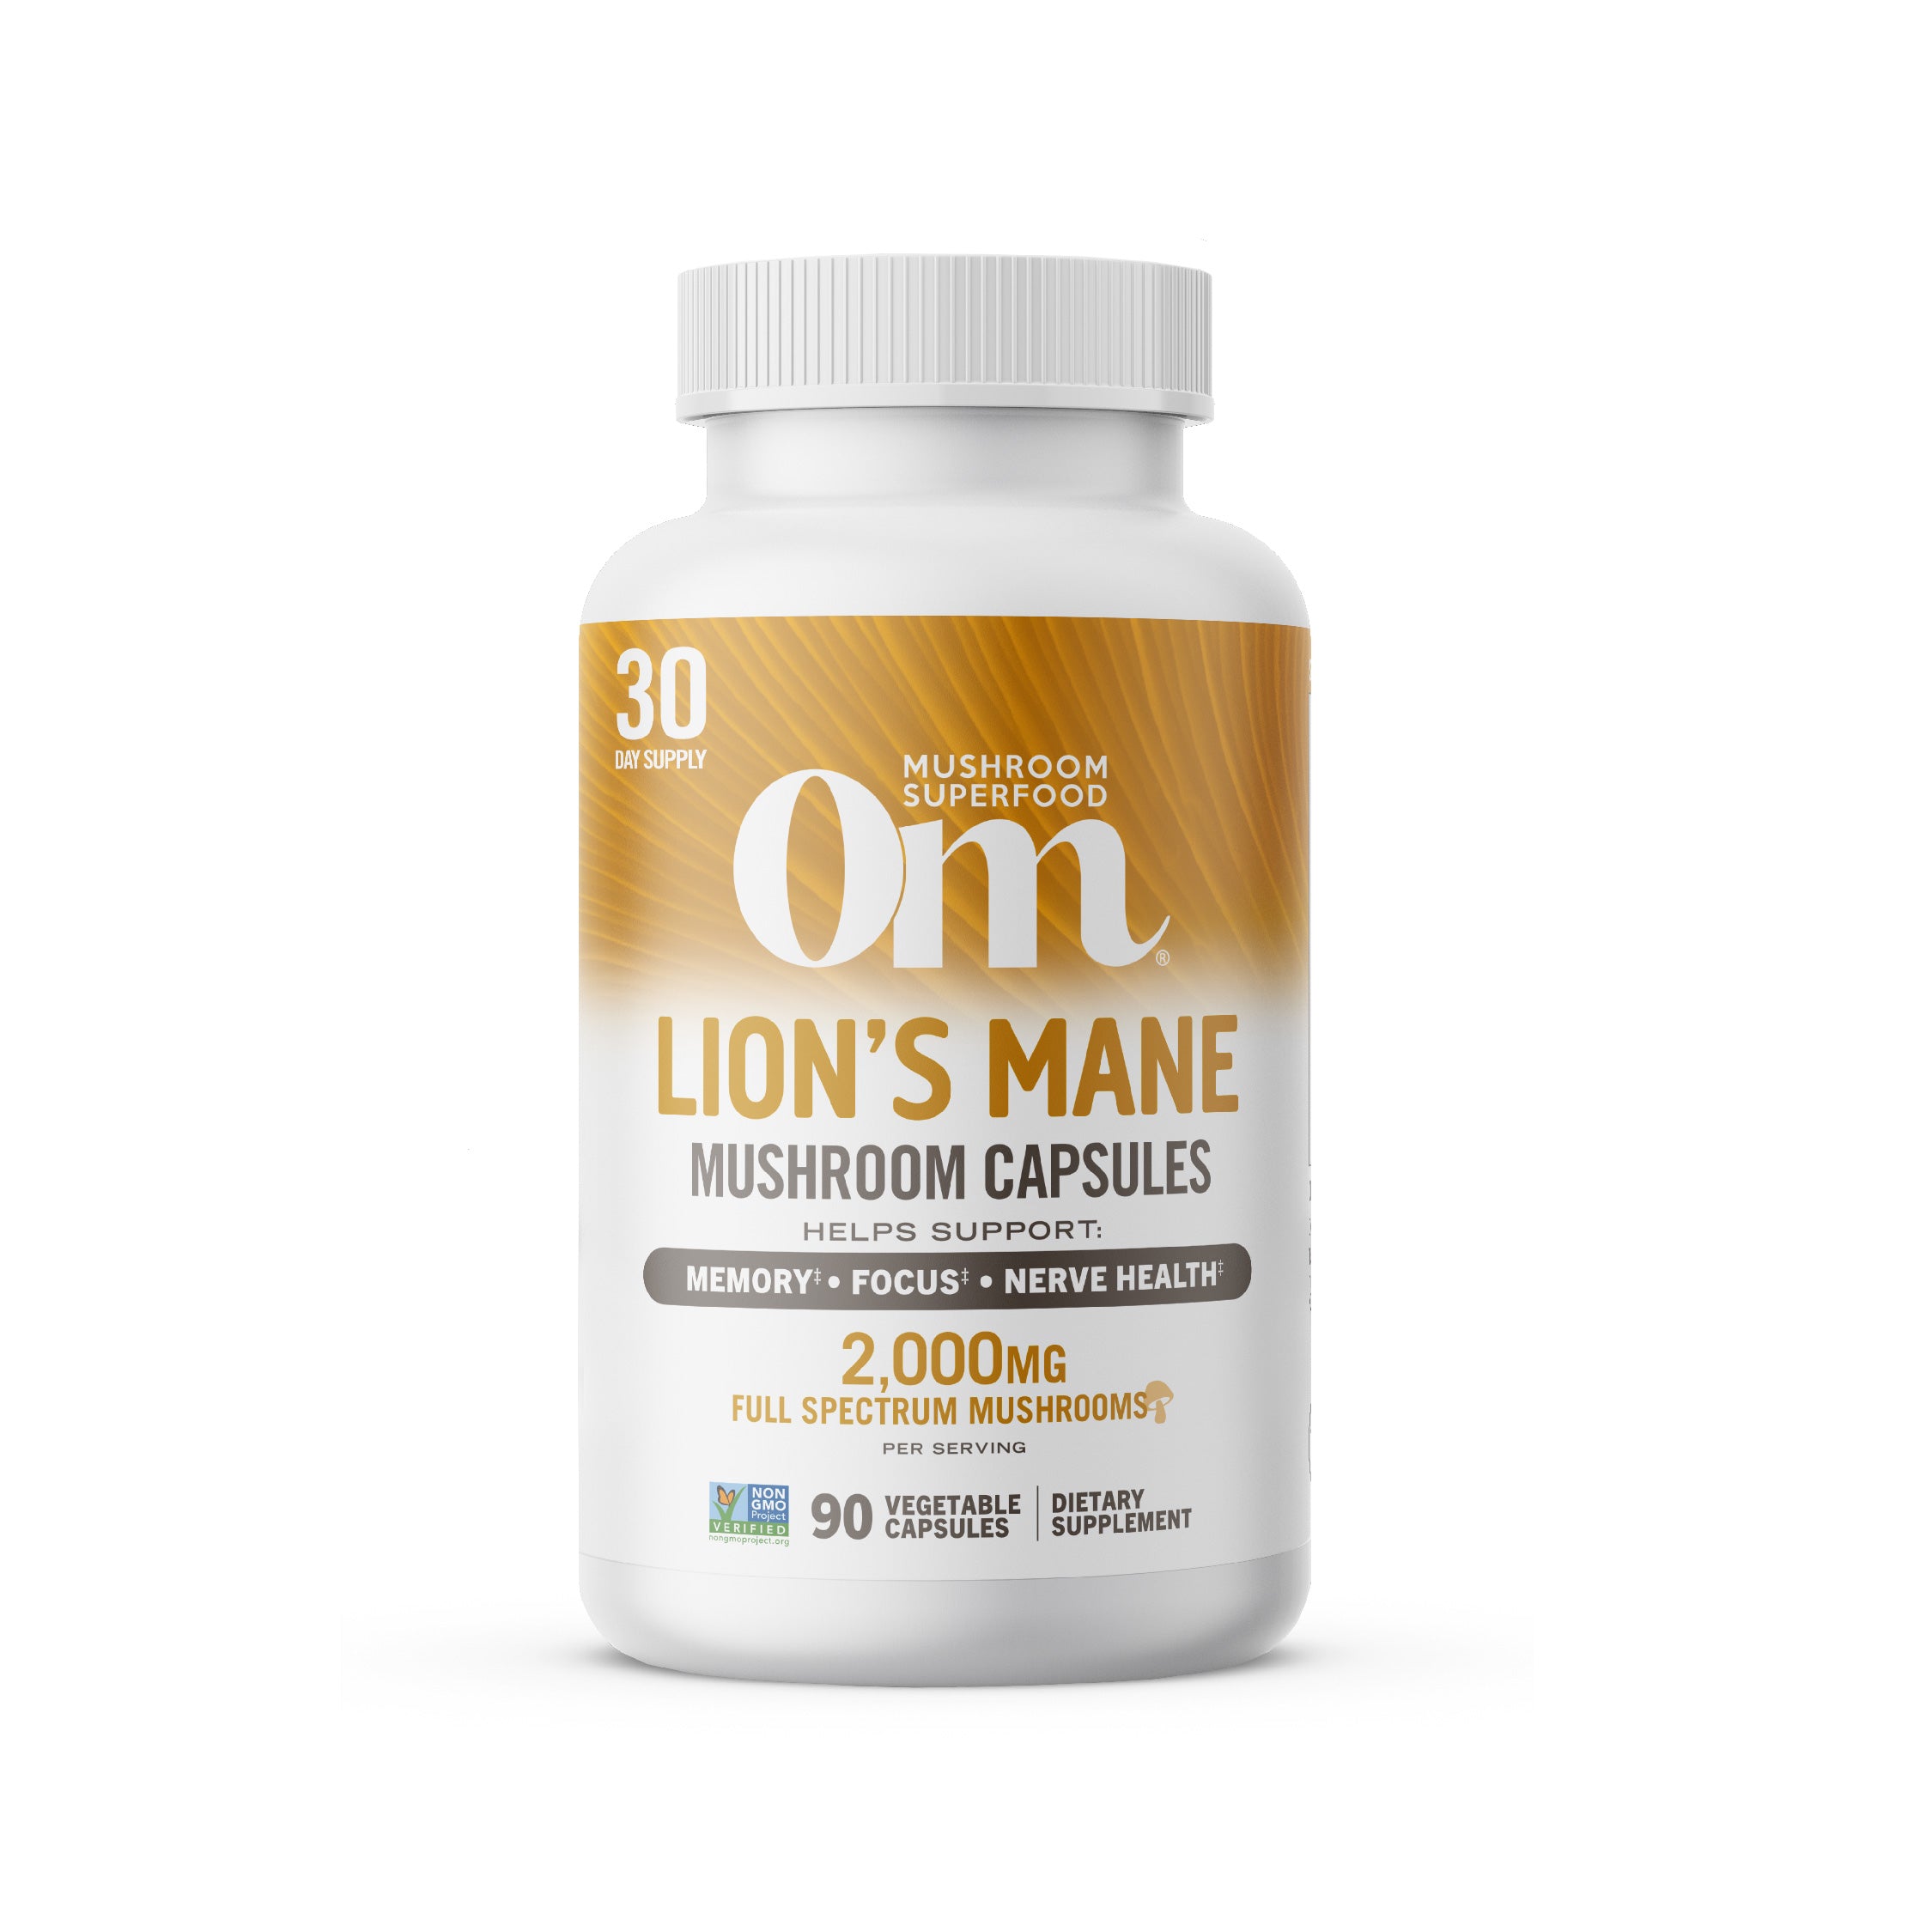 Lion’s Mane Mushroom Capsules